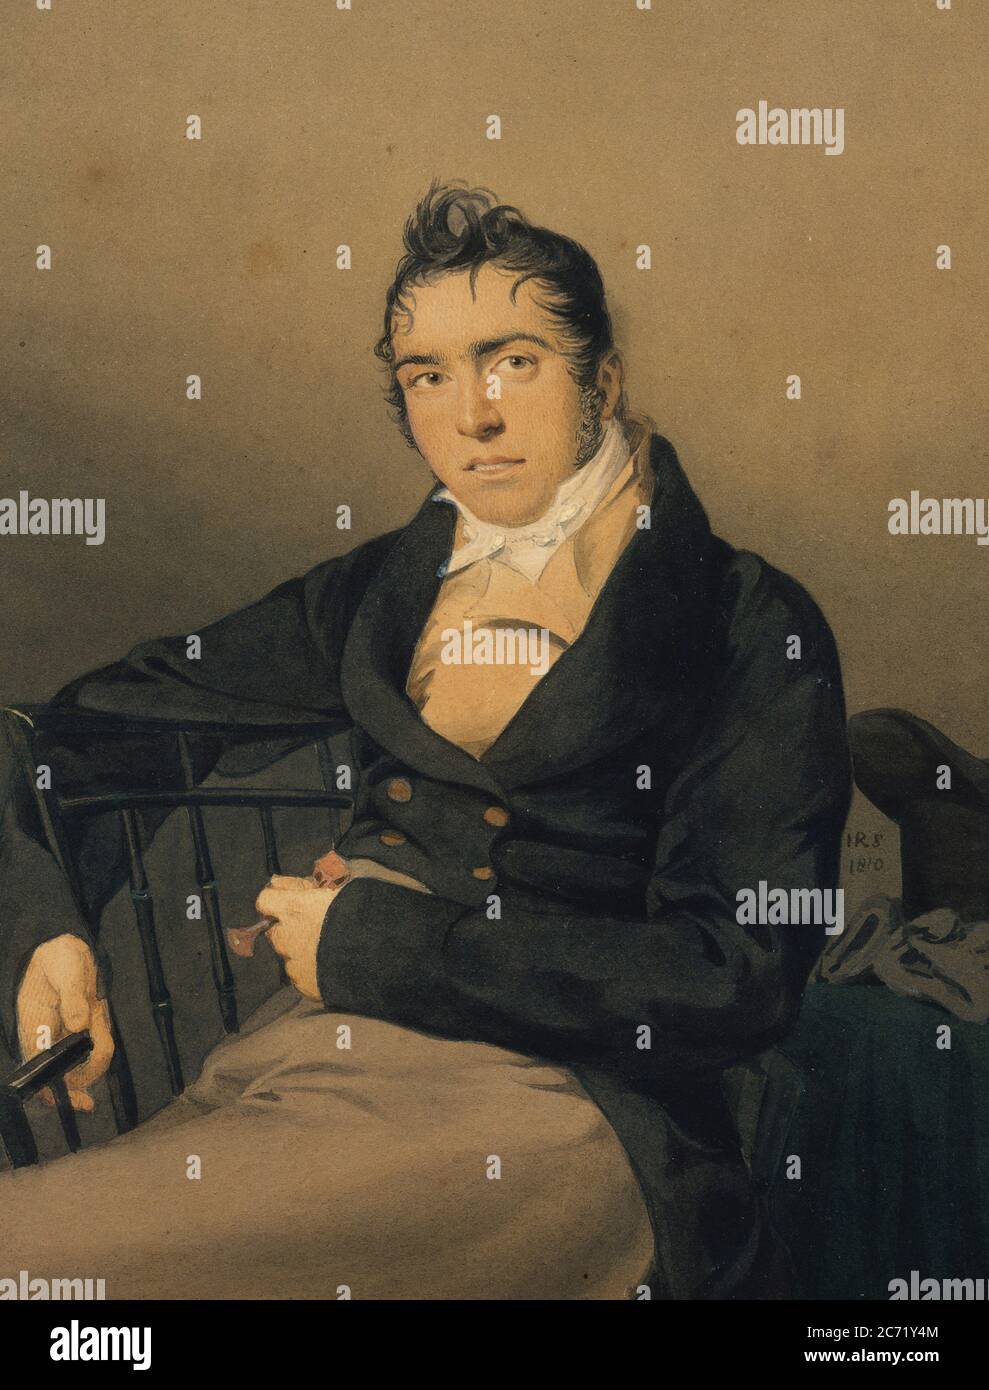 Allan Melville, 1810. Stock Photo